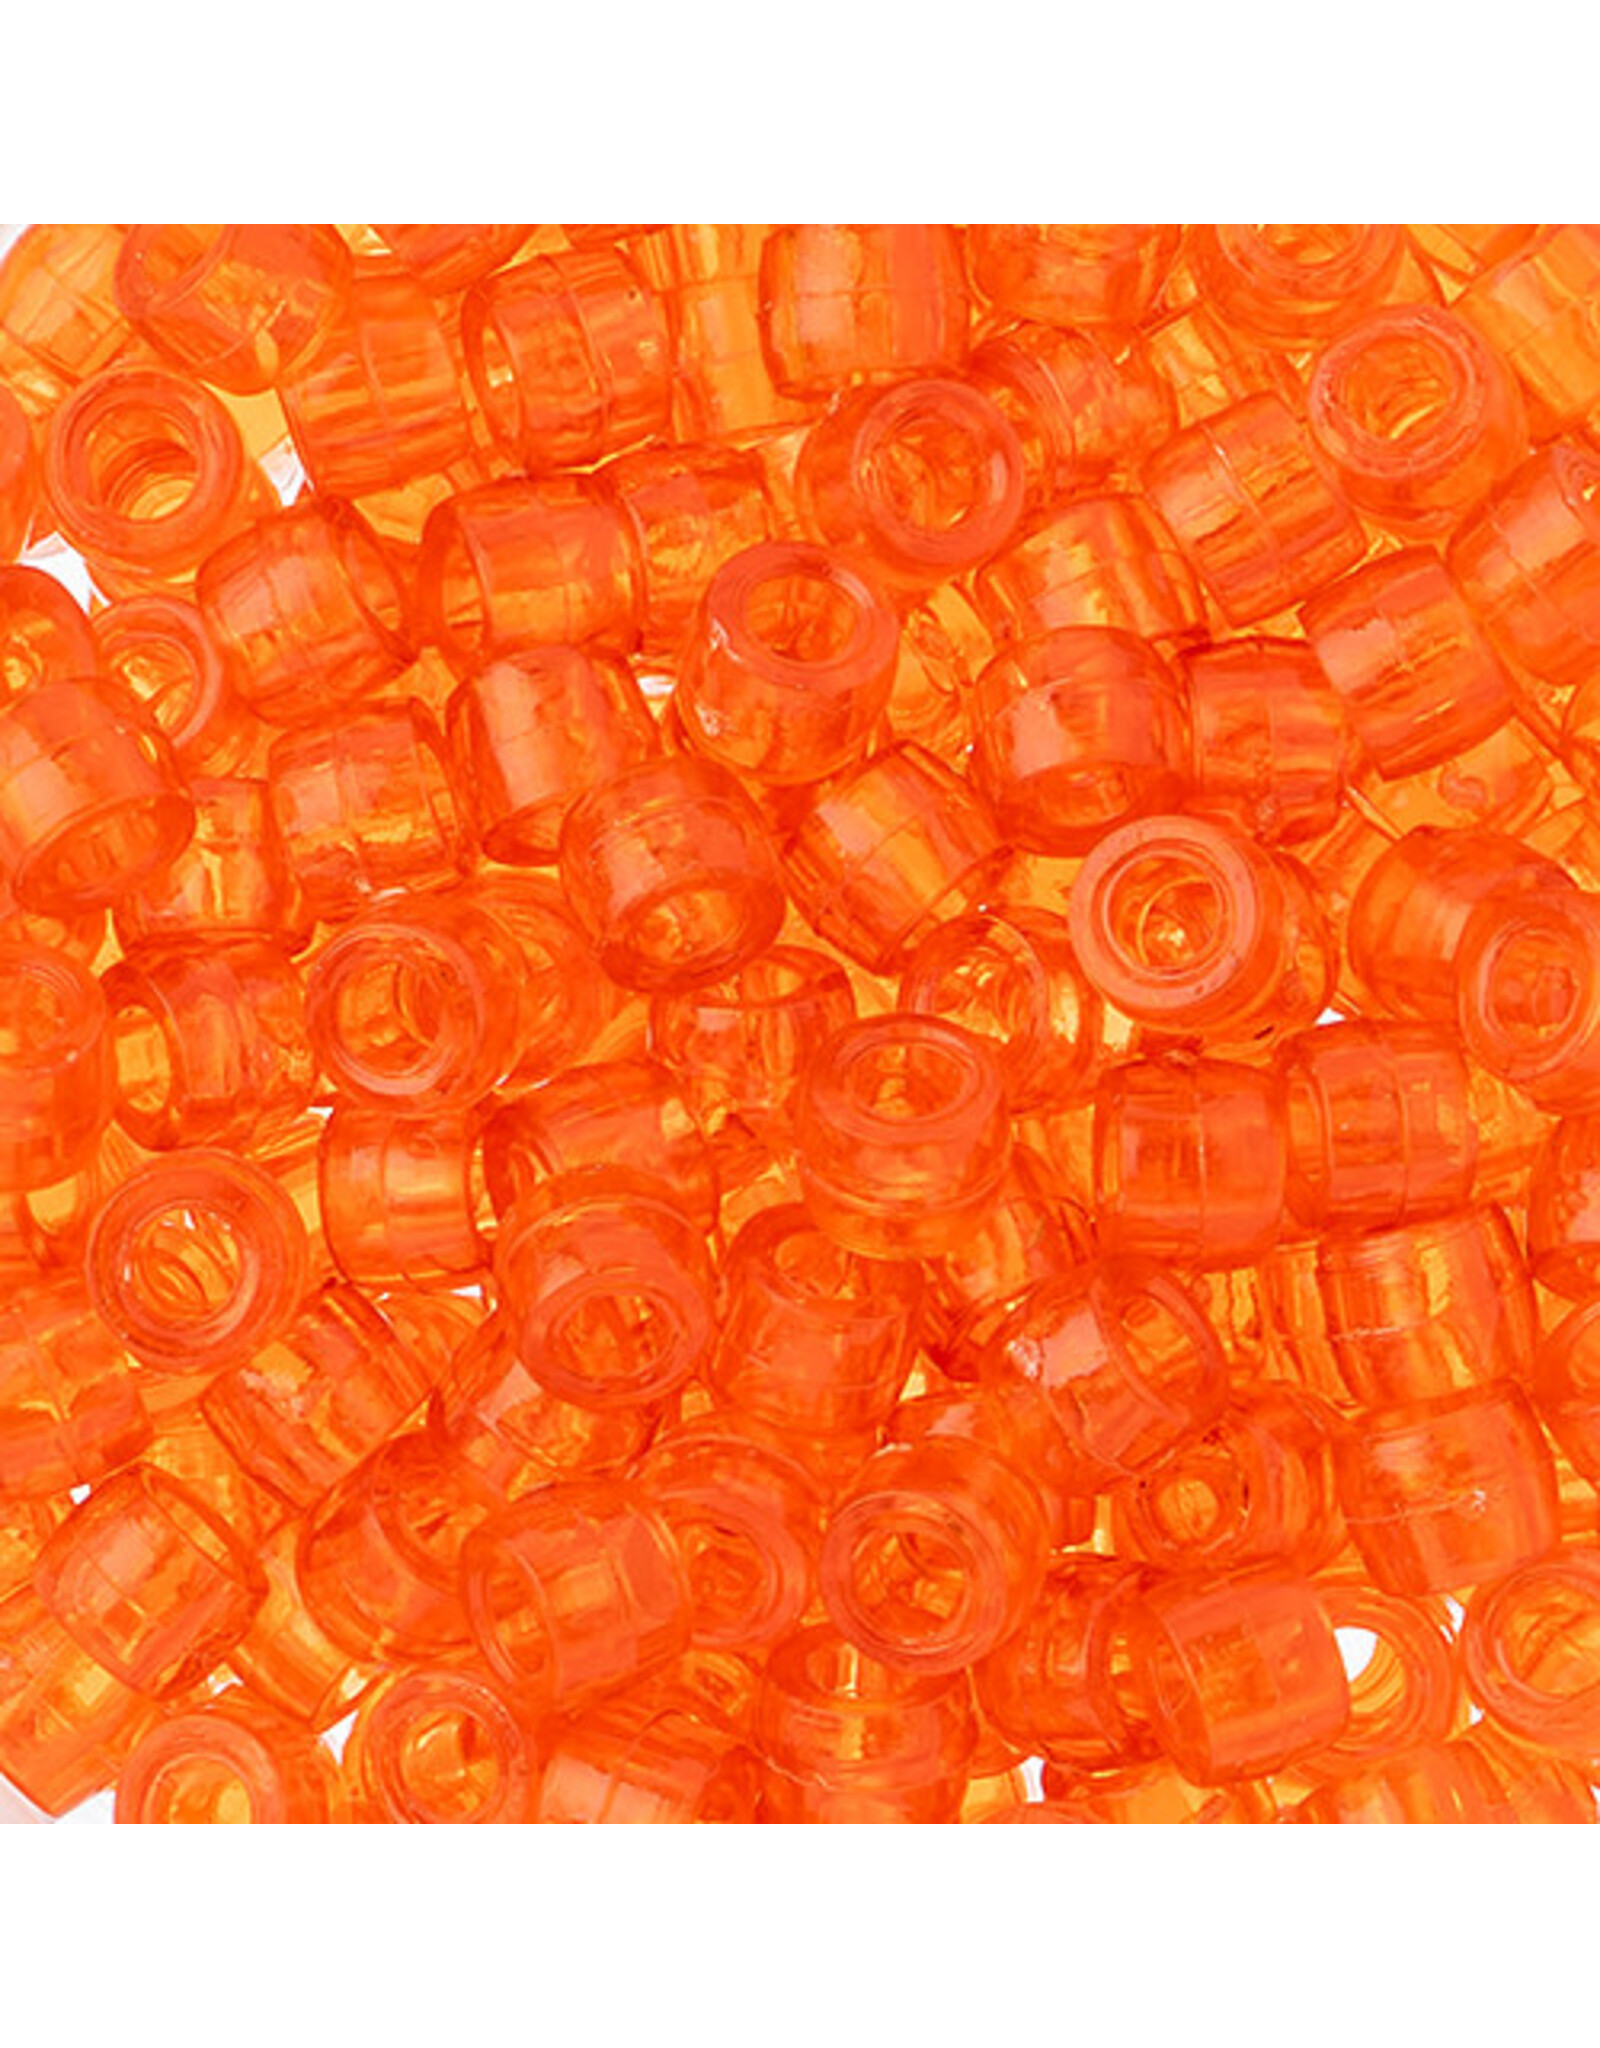 Mini Crow Beads 6mm Transparent Orange  x250